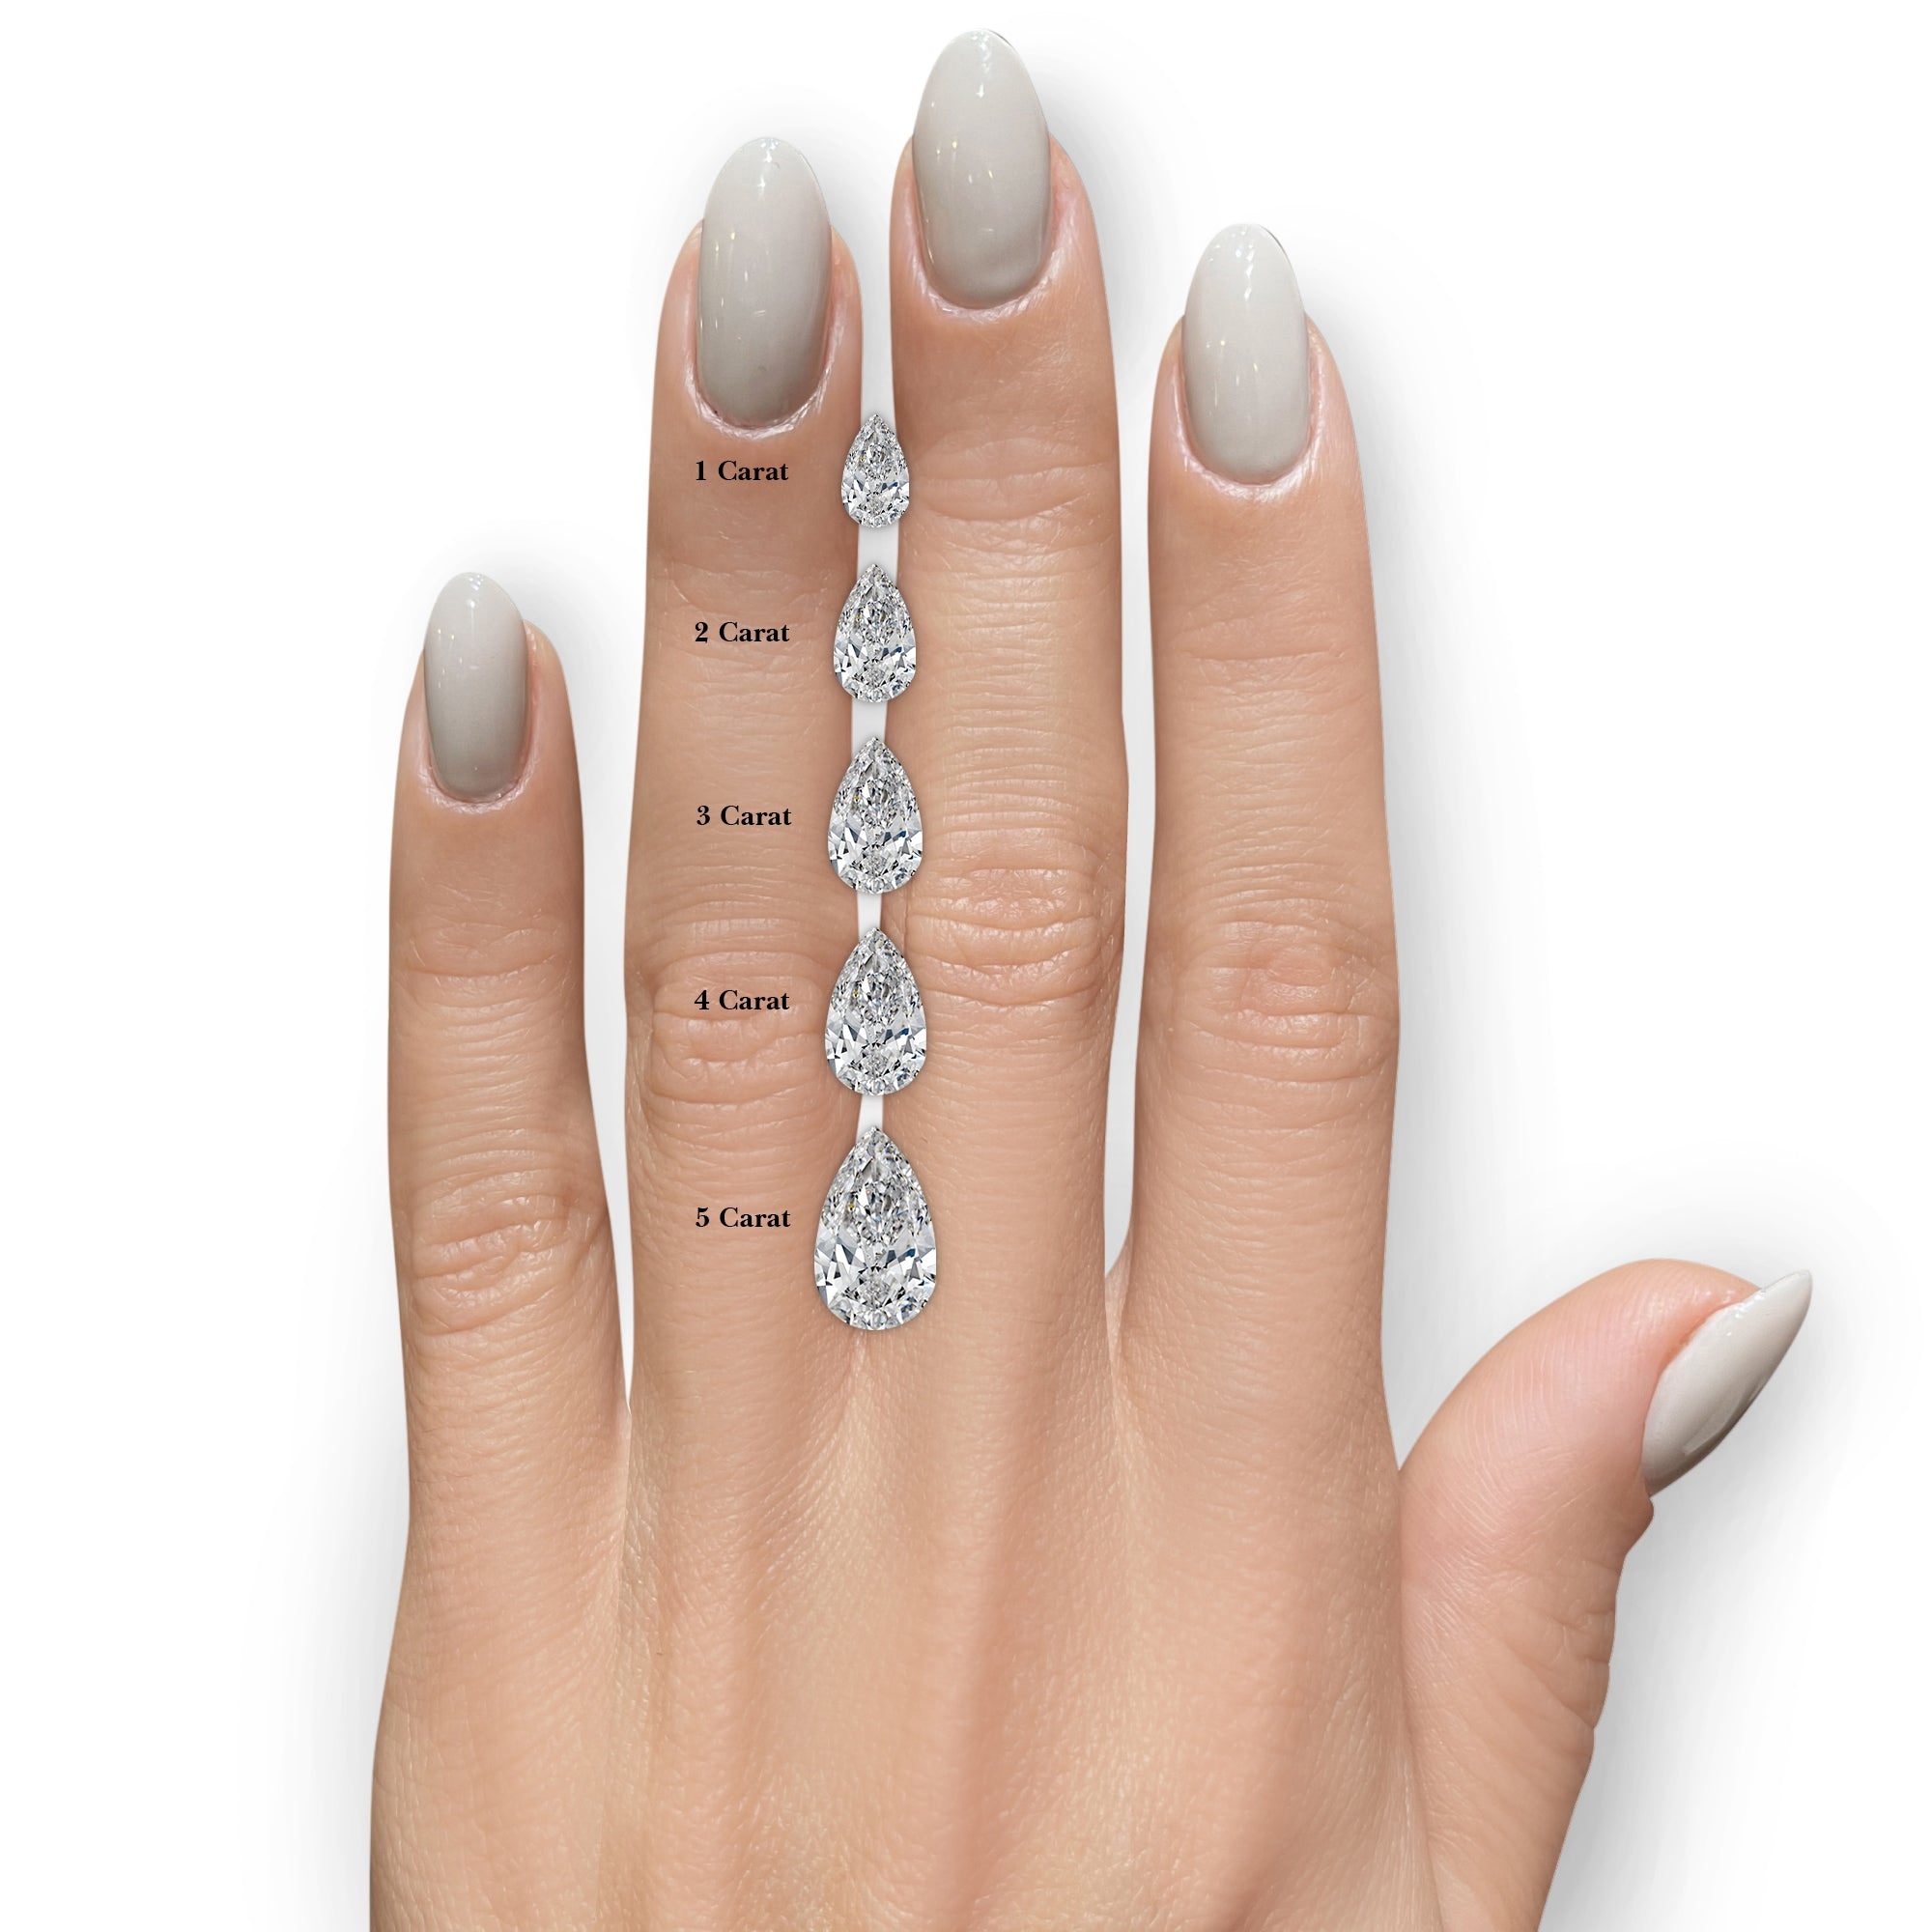 Jenny Diamond Engagement Ring -18K White Gold